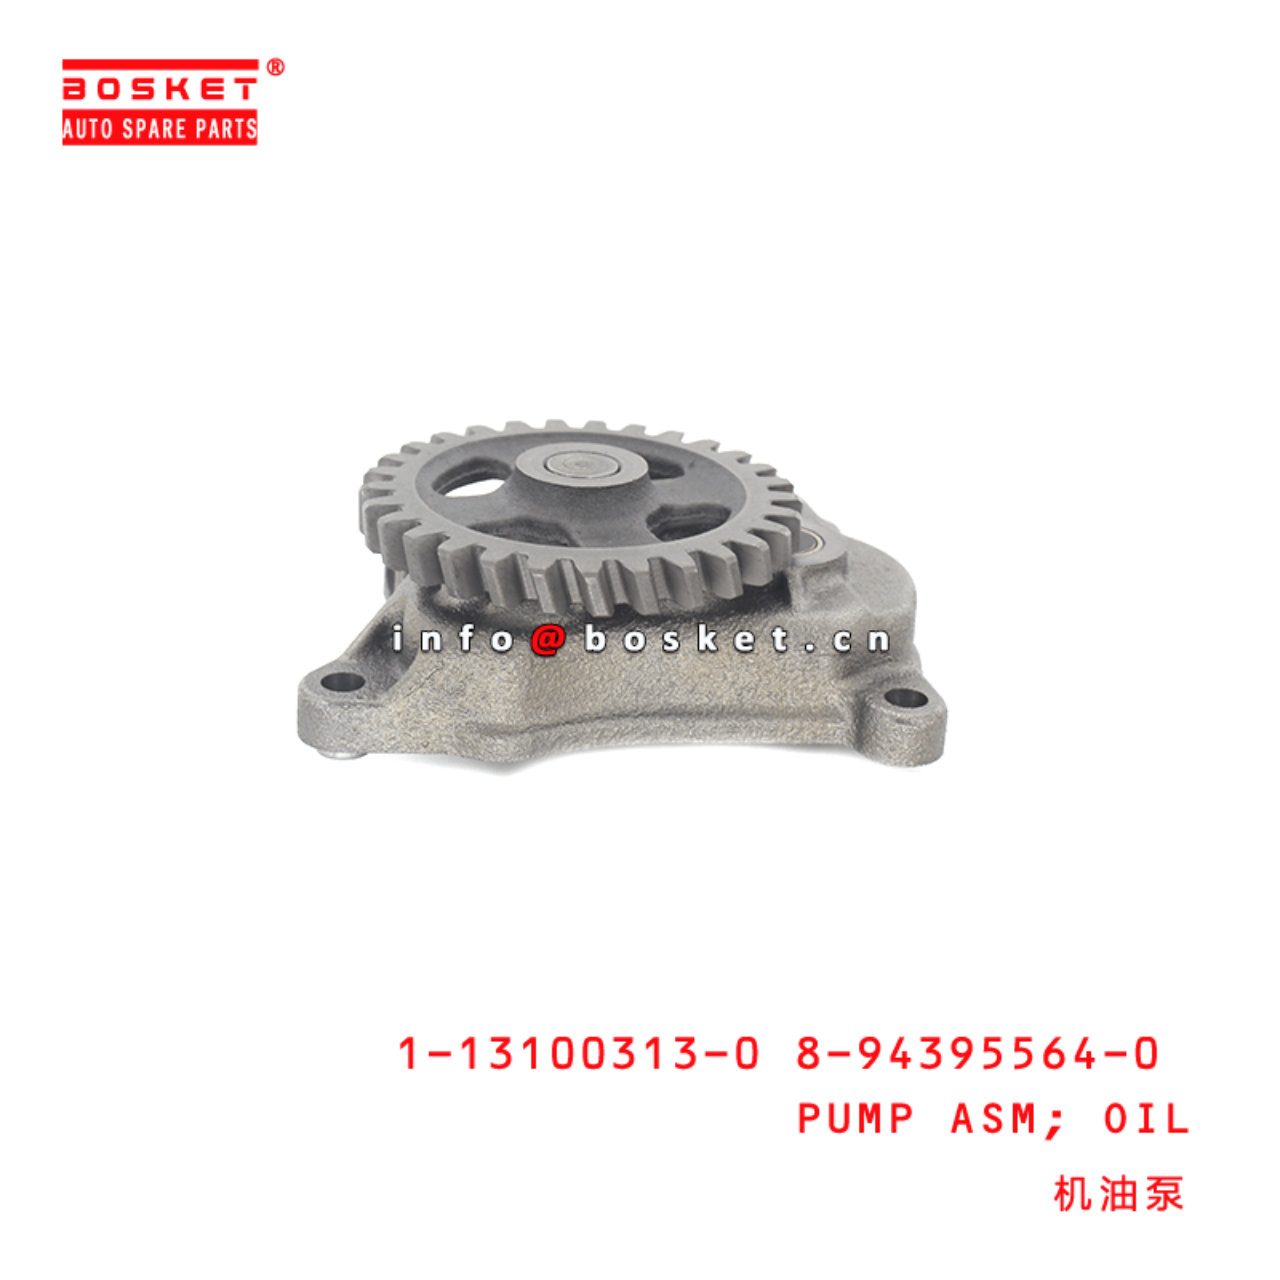 1-13100313-0 8-94395564-0 Oil Pump Assembly 1131003130 8943955640 Suitable for ISUZU FSR FRR 4HK1 